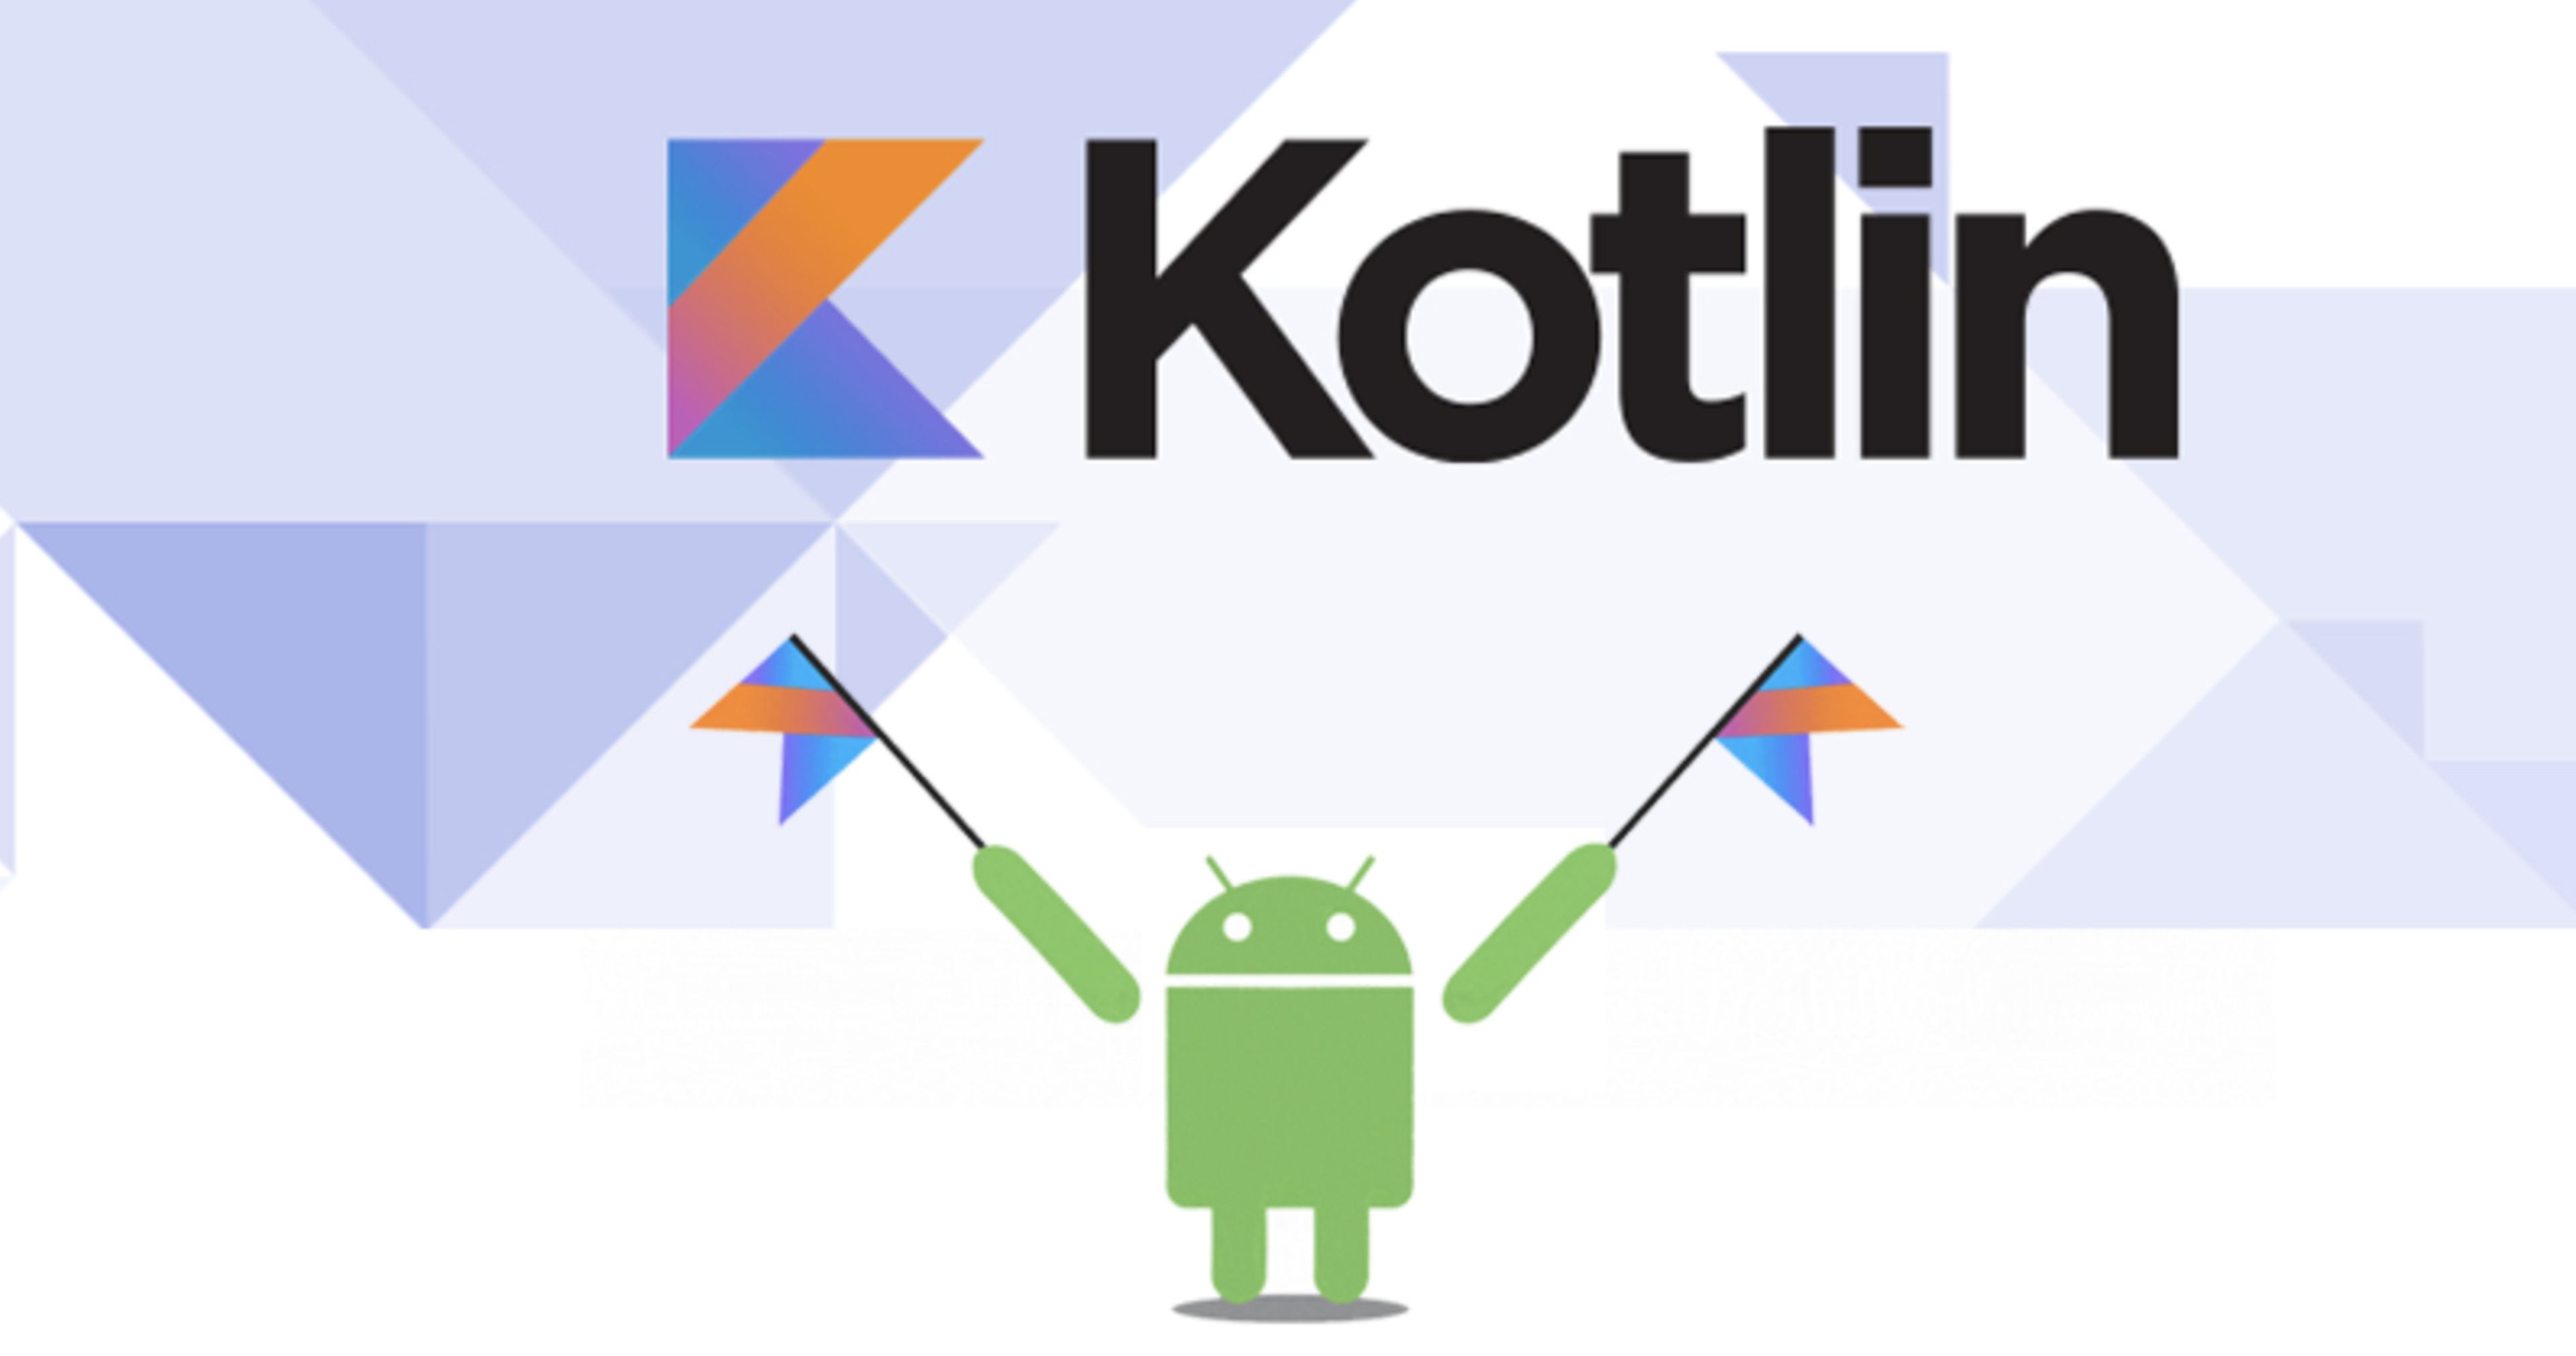 Kotlin playground. Kotlin язык программирования логотип. Программирование Kotlin. Котлин логотип. Котлин язык программирования лого.